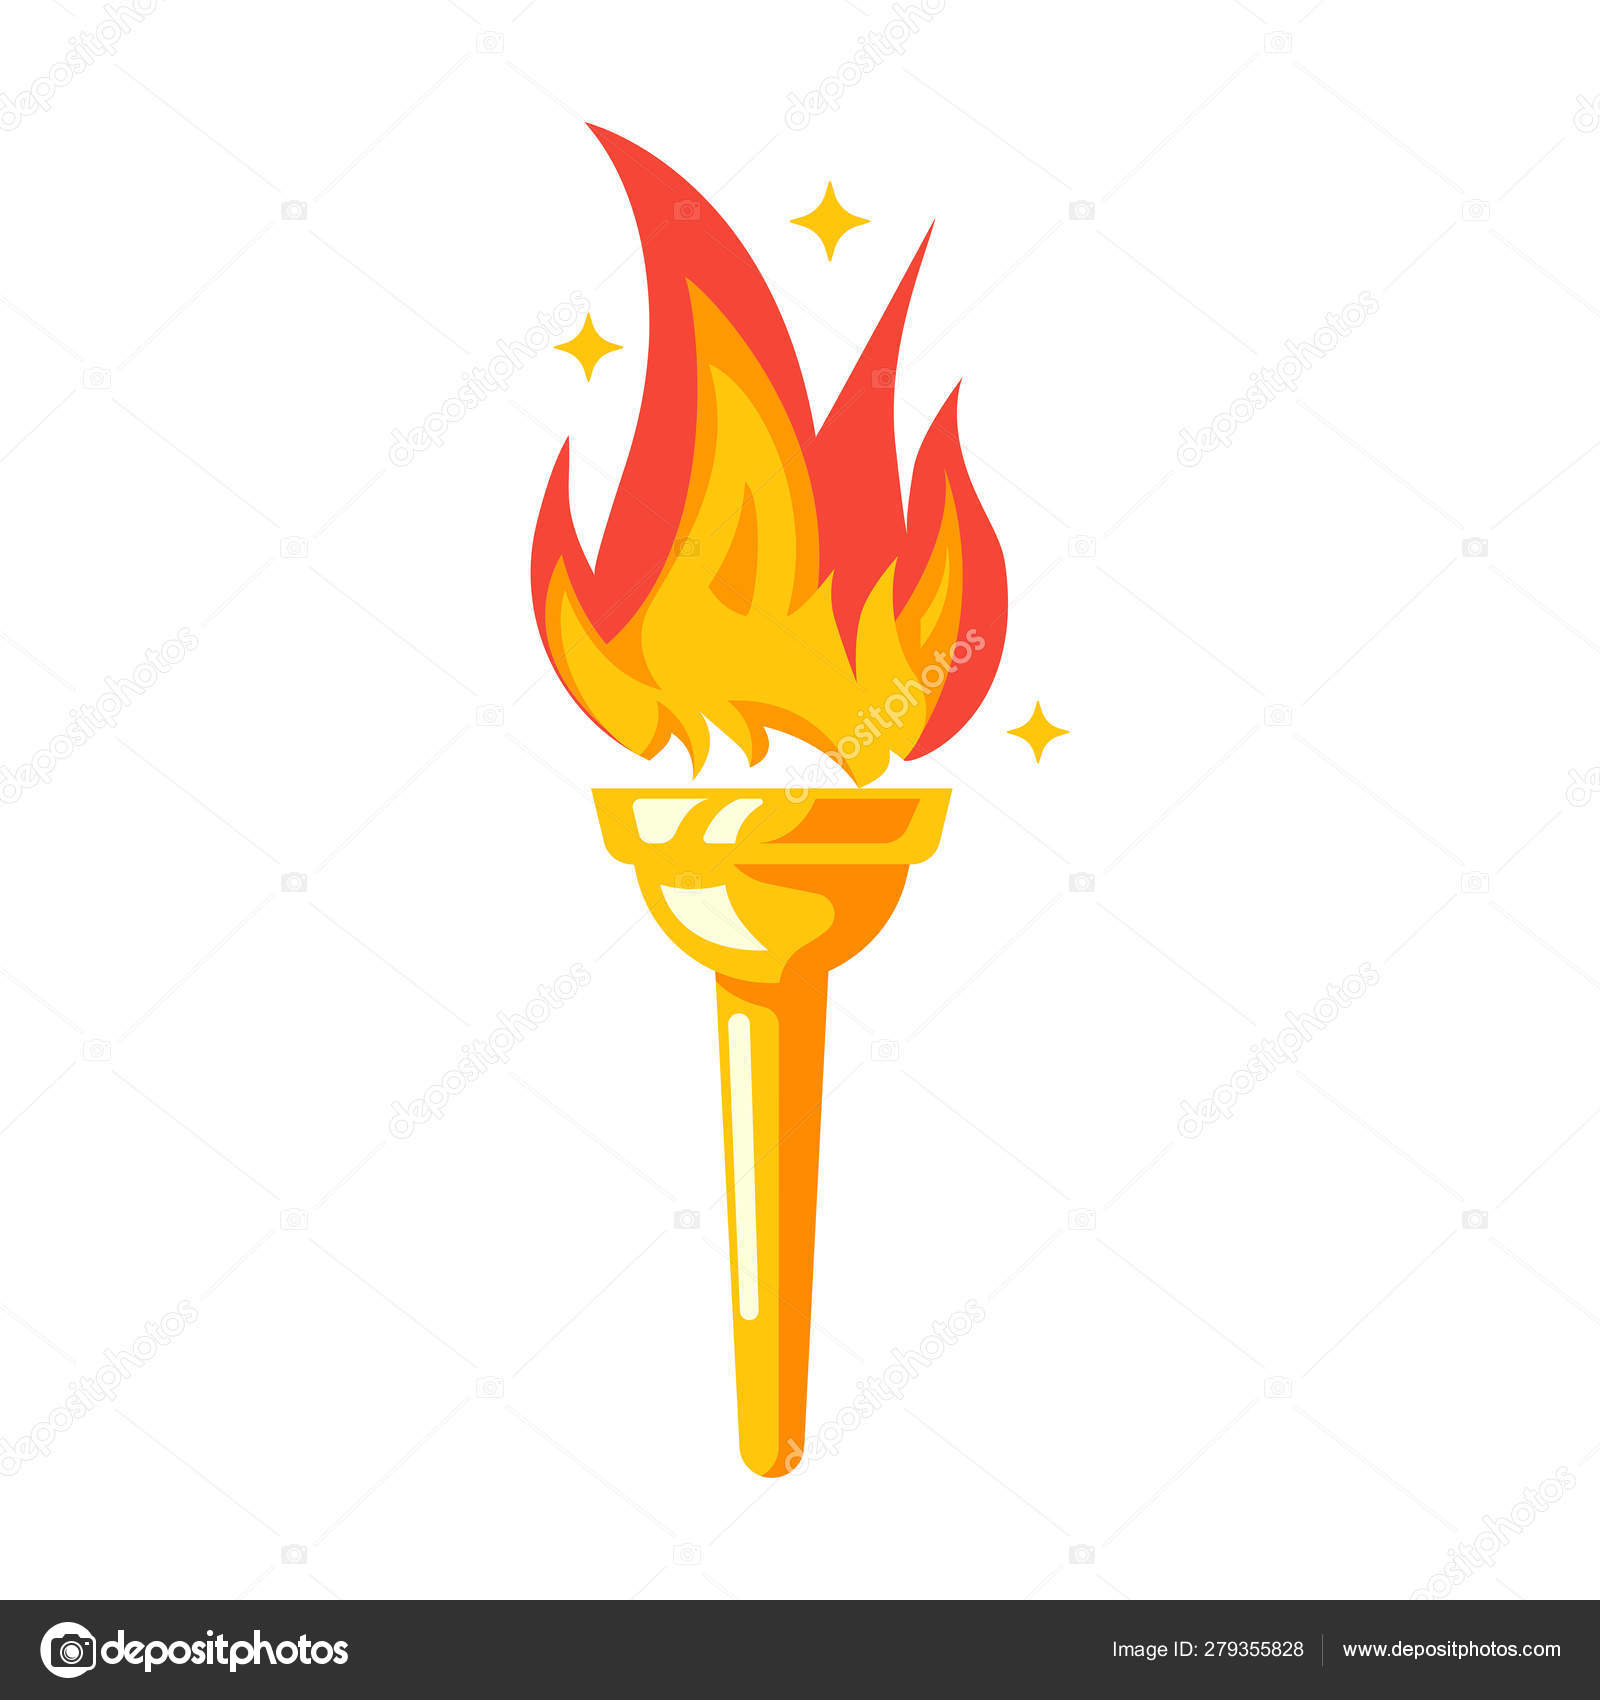 Chama brilhante fogo de desenho animado tocha ou fósforo a arder